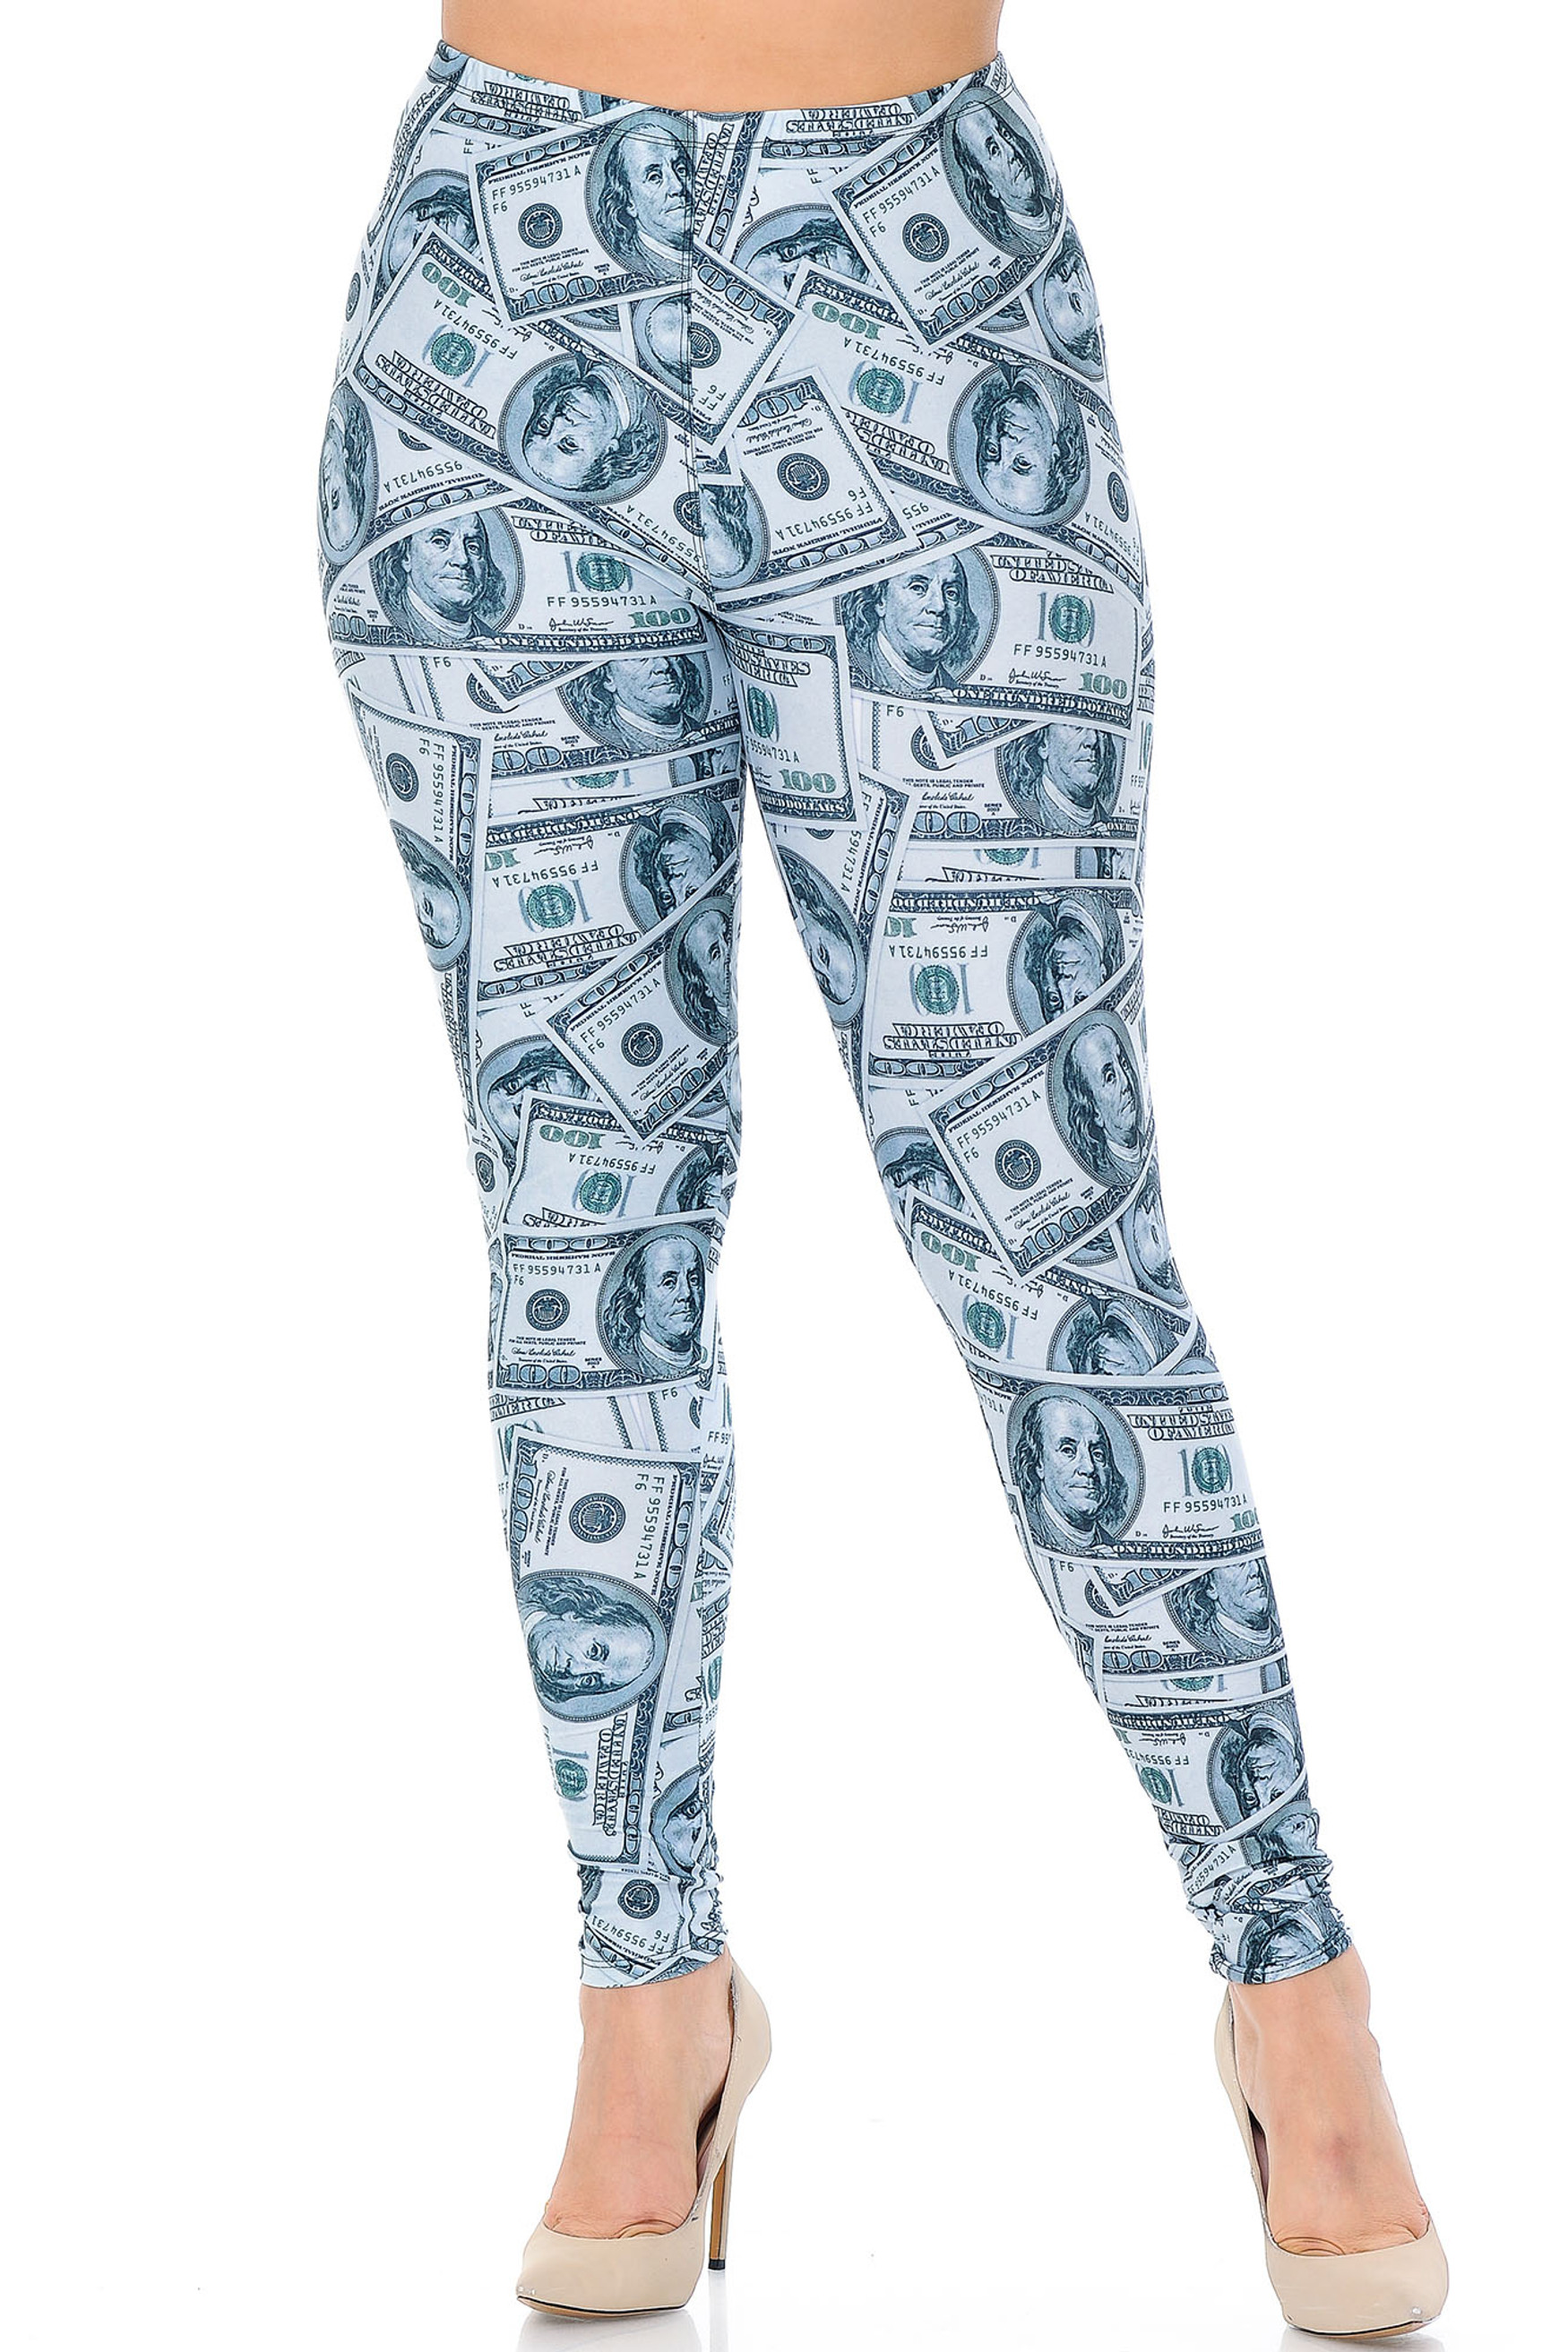 Creamy Soft Raining Money Extra Plus Size Leggings - 3X-5X - USA Fashion™